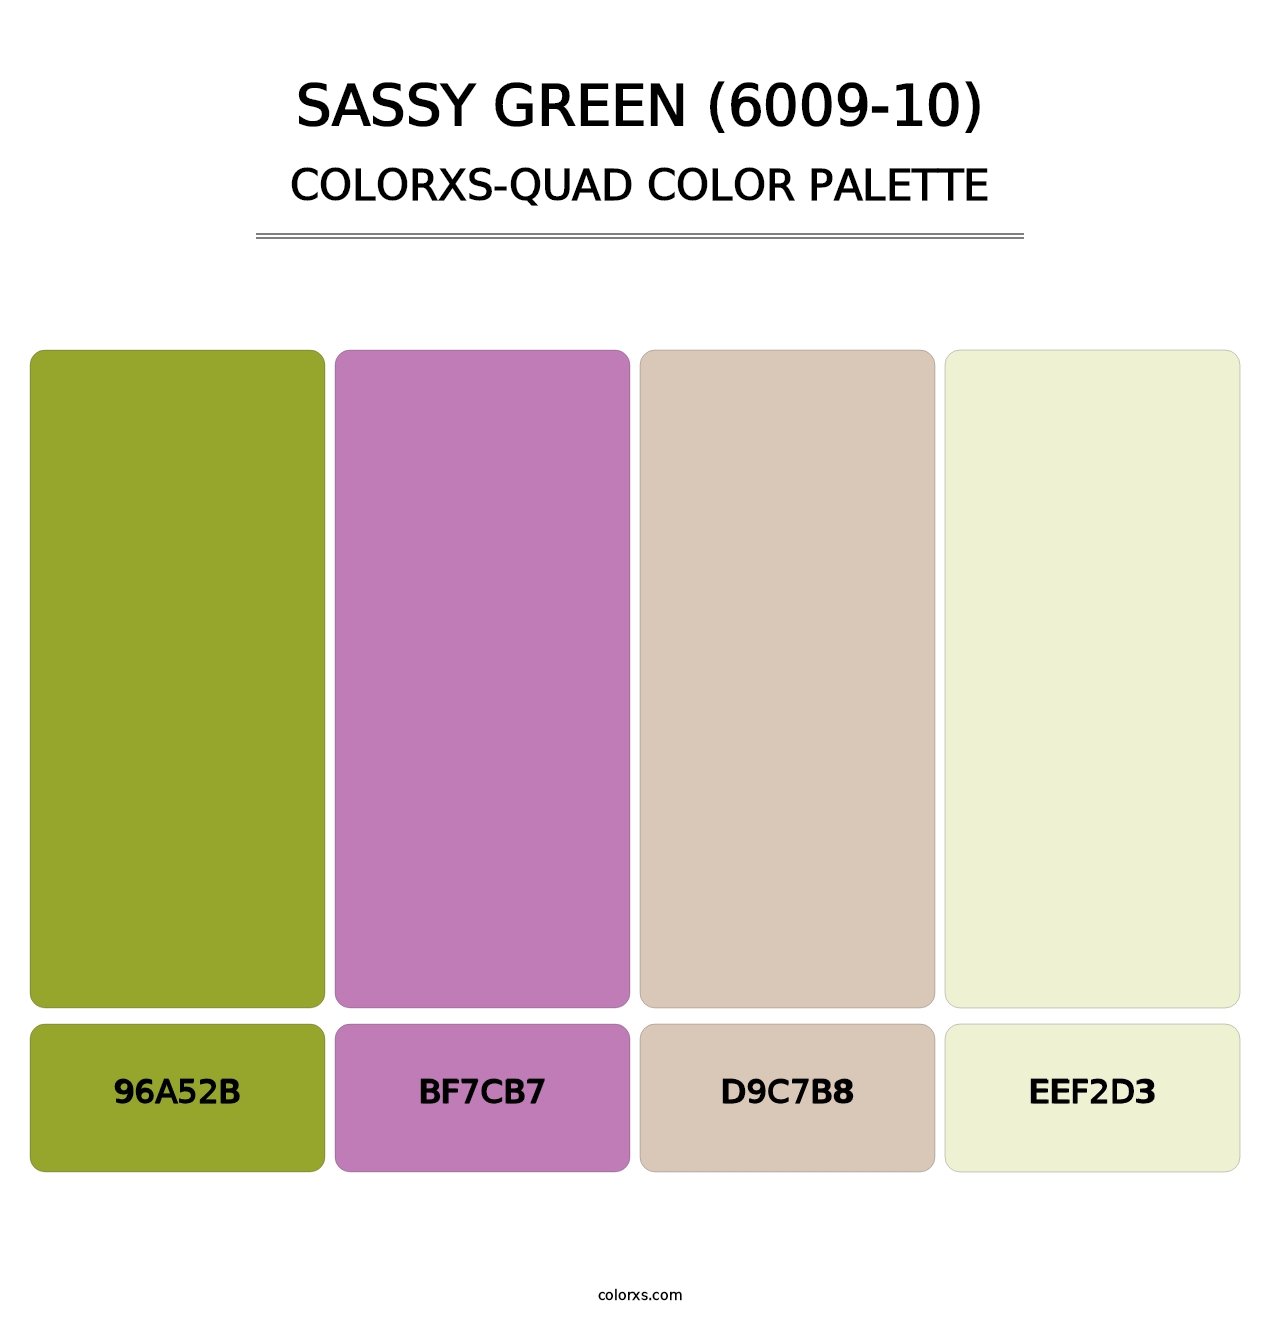 Sassy Green (6009-10) - Colorxs Quad Palette